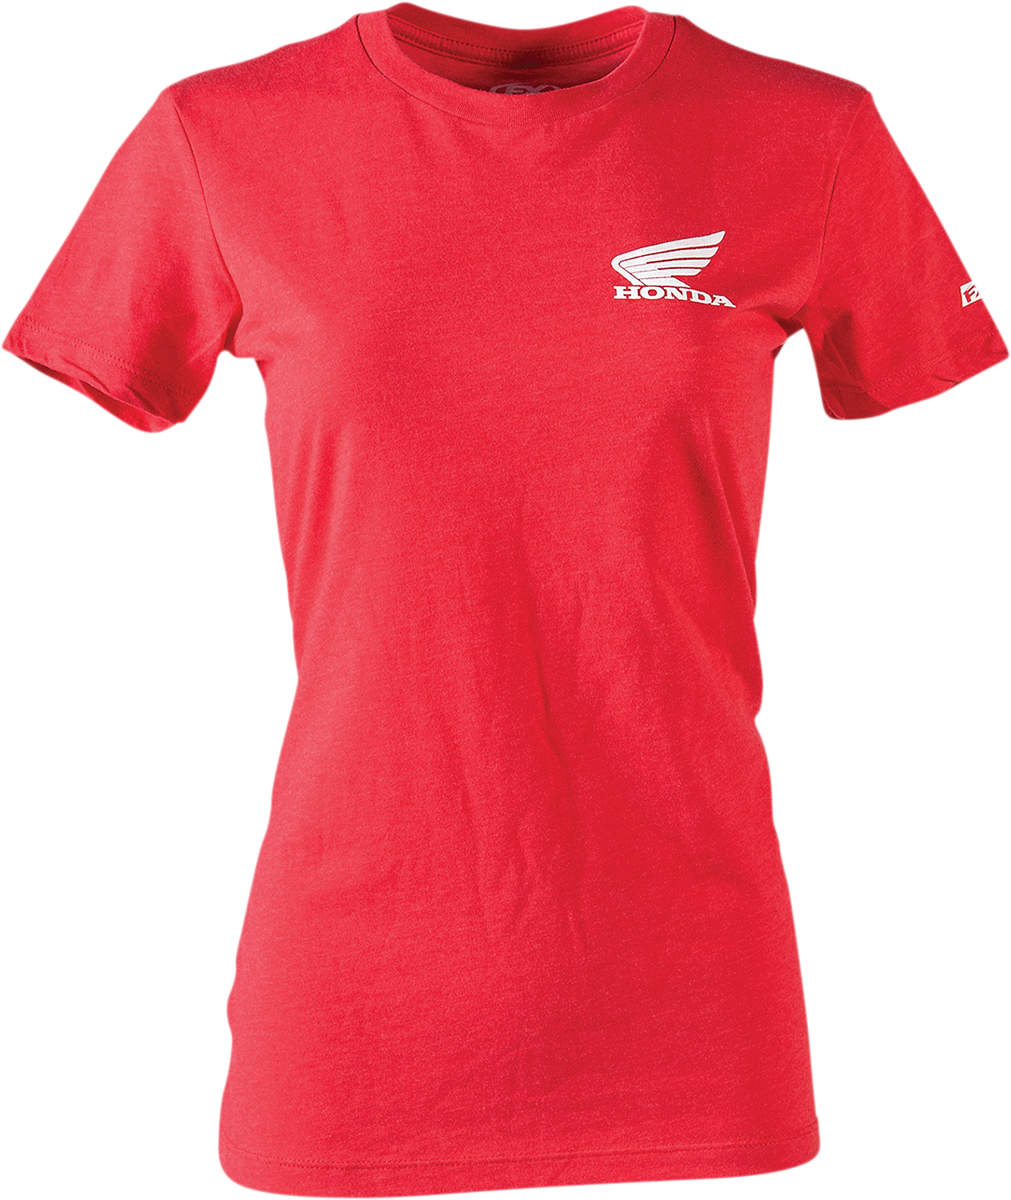 FACTORY EFFEX Women's Honda Icon T-Shirt - Red - Small 24-87310